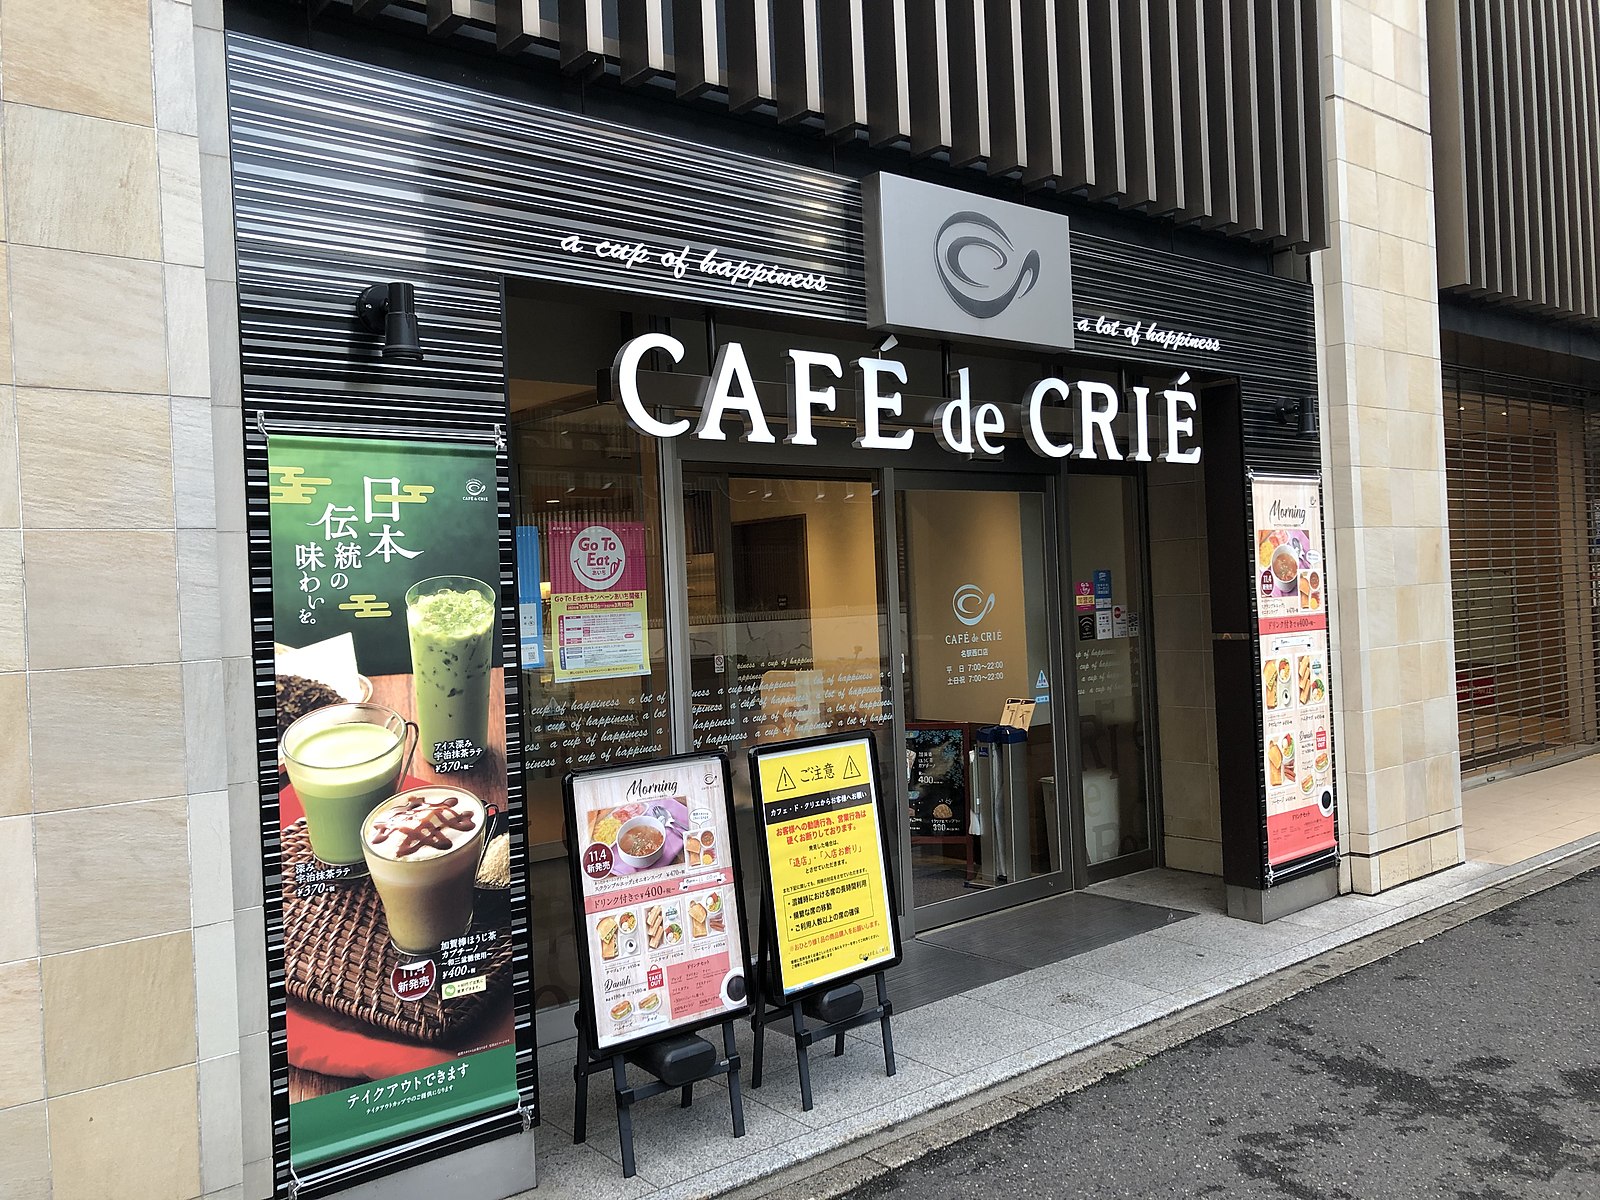 Café de Crié - franponais https://commons.wikimedia.org/wiki/File:CAFE-de-CRIE-1.jpg